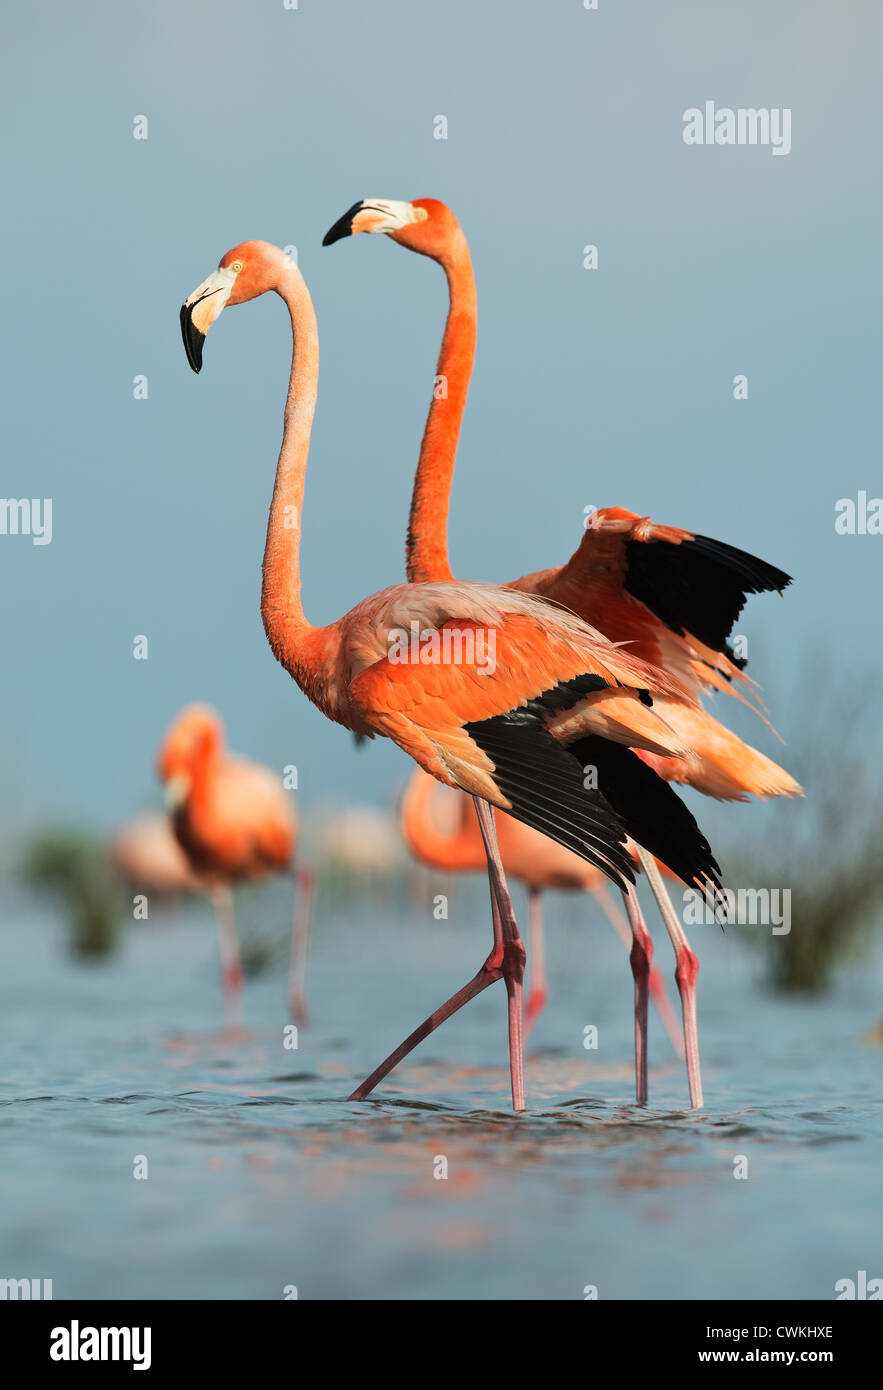 Karibik Flamingo Stockfoto